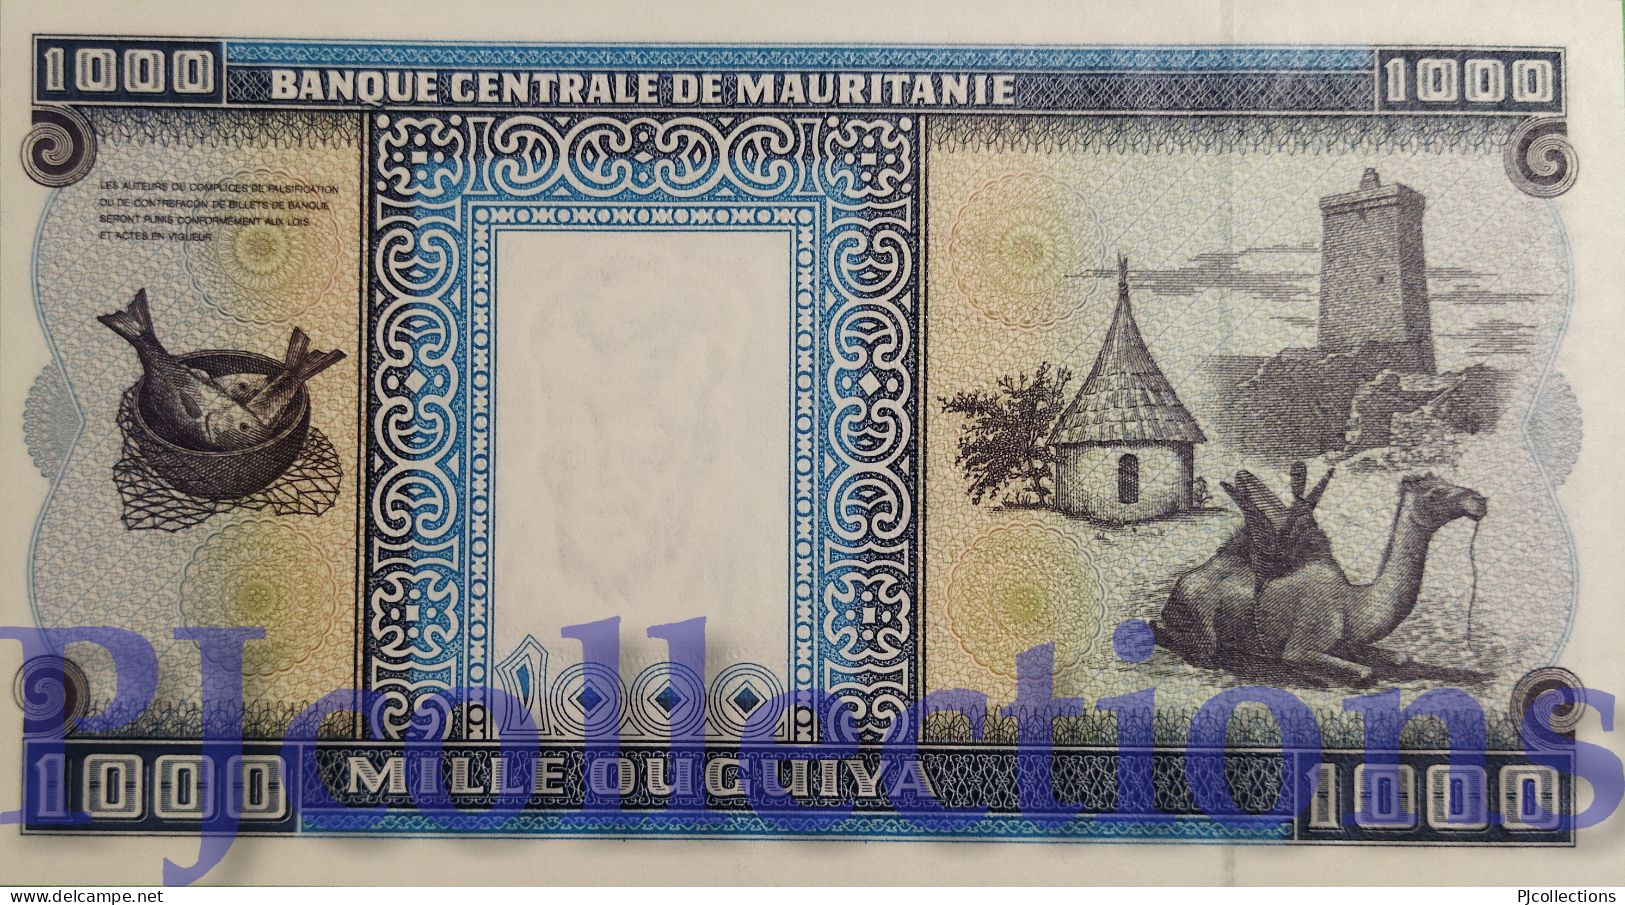 MAURITANIA 1000 OUGUIYA 1999 PICK 9a UNC - Mauritanie